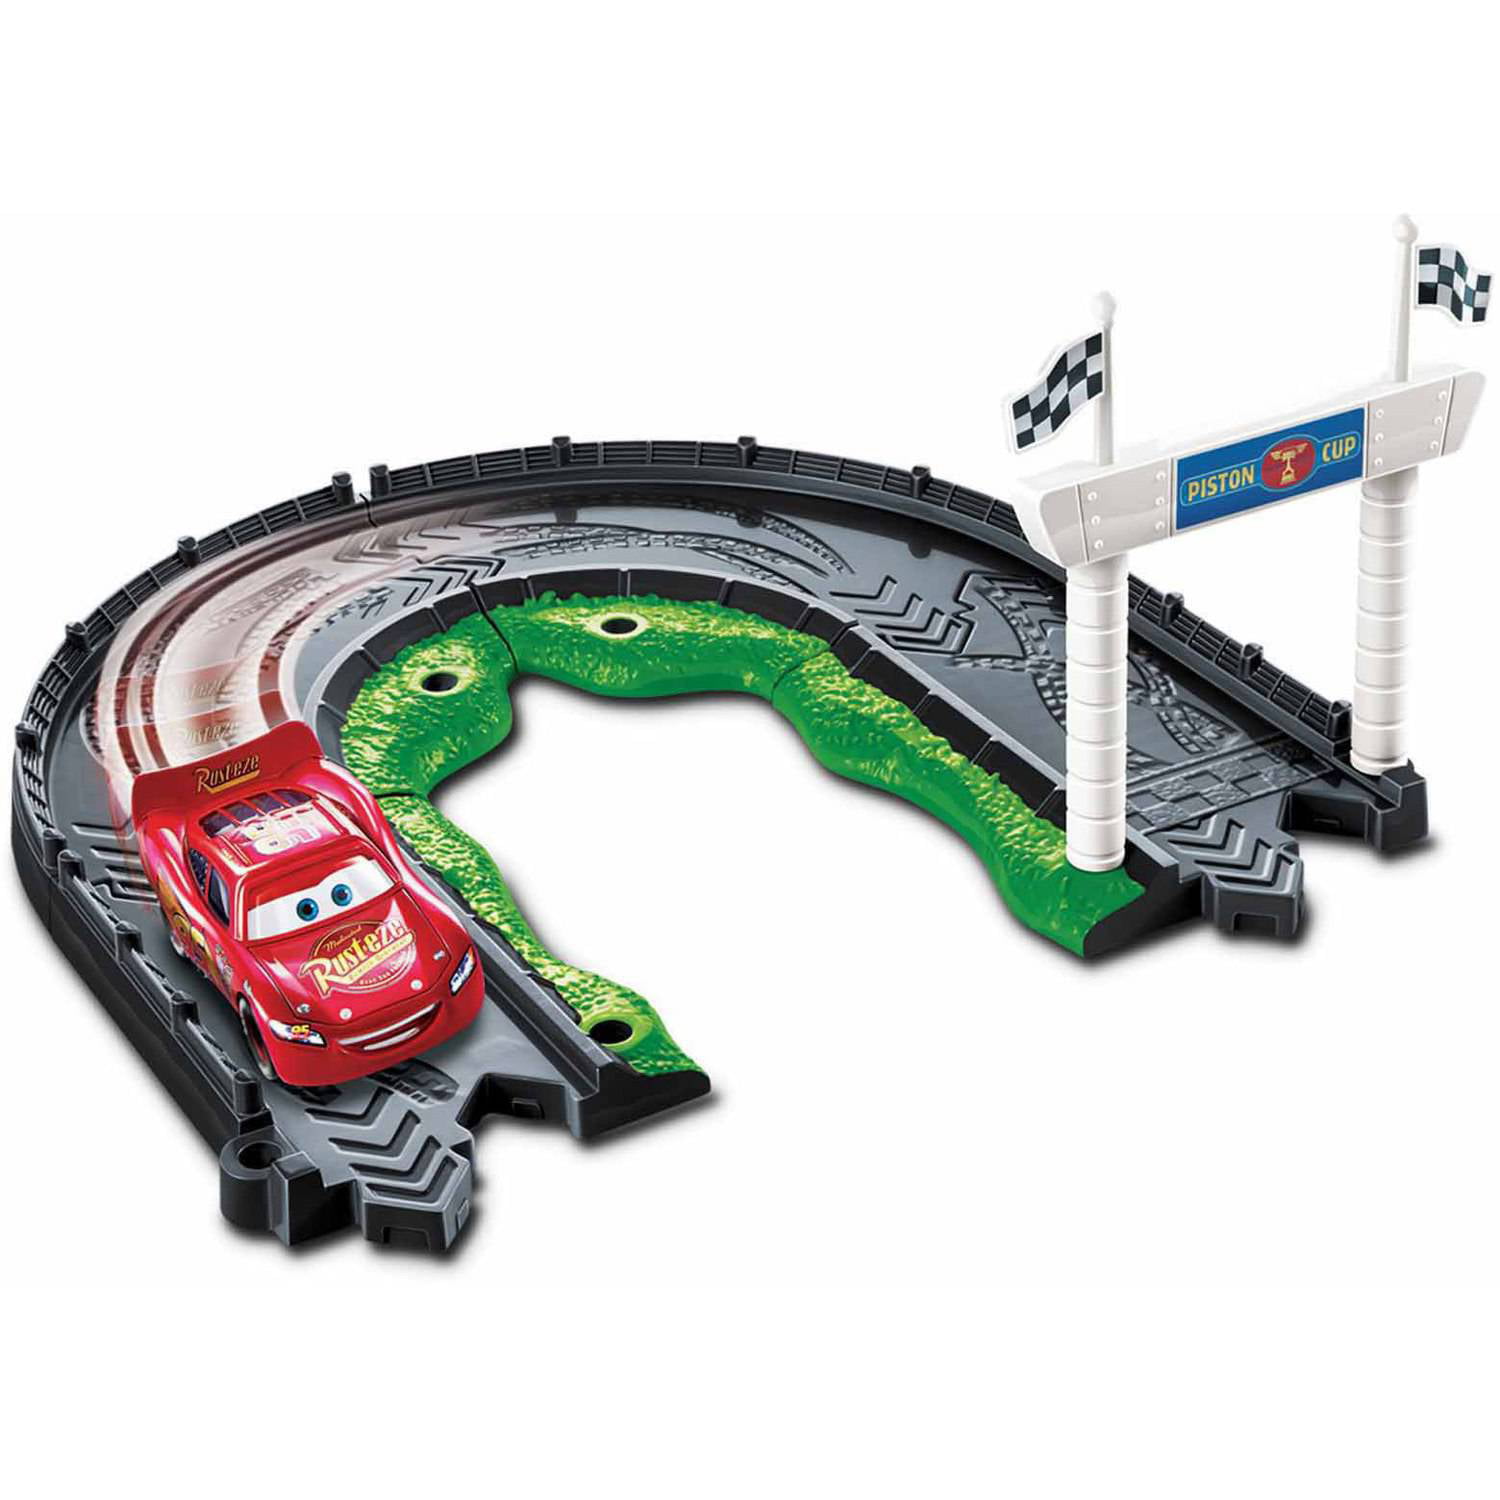 Disney Pixar Cars Coffret Circuit Course Piston Cup Interactif